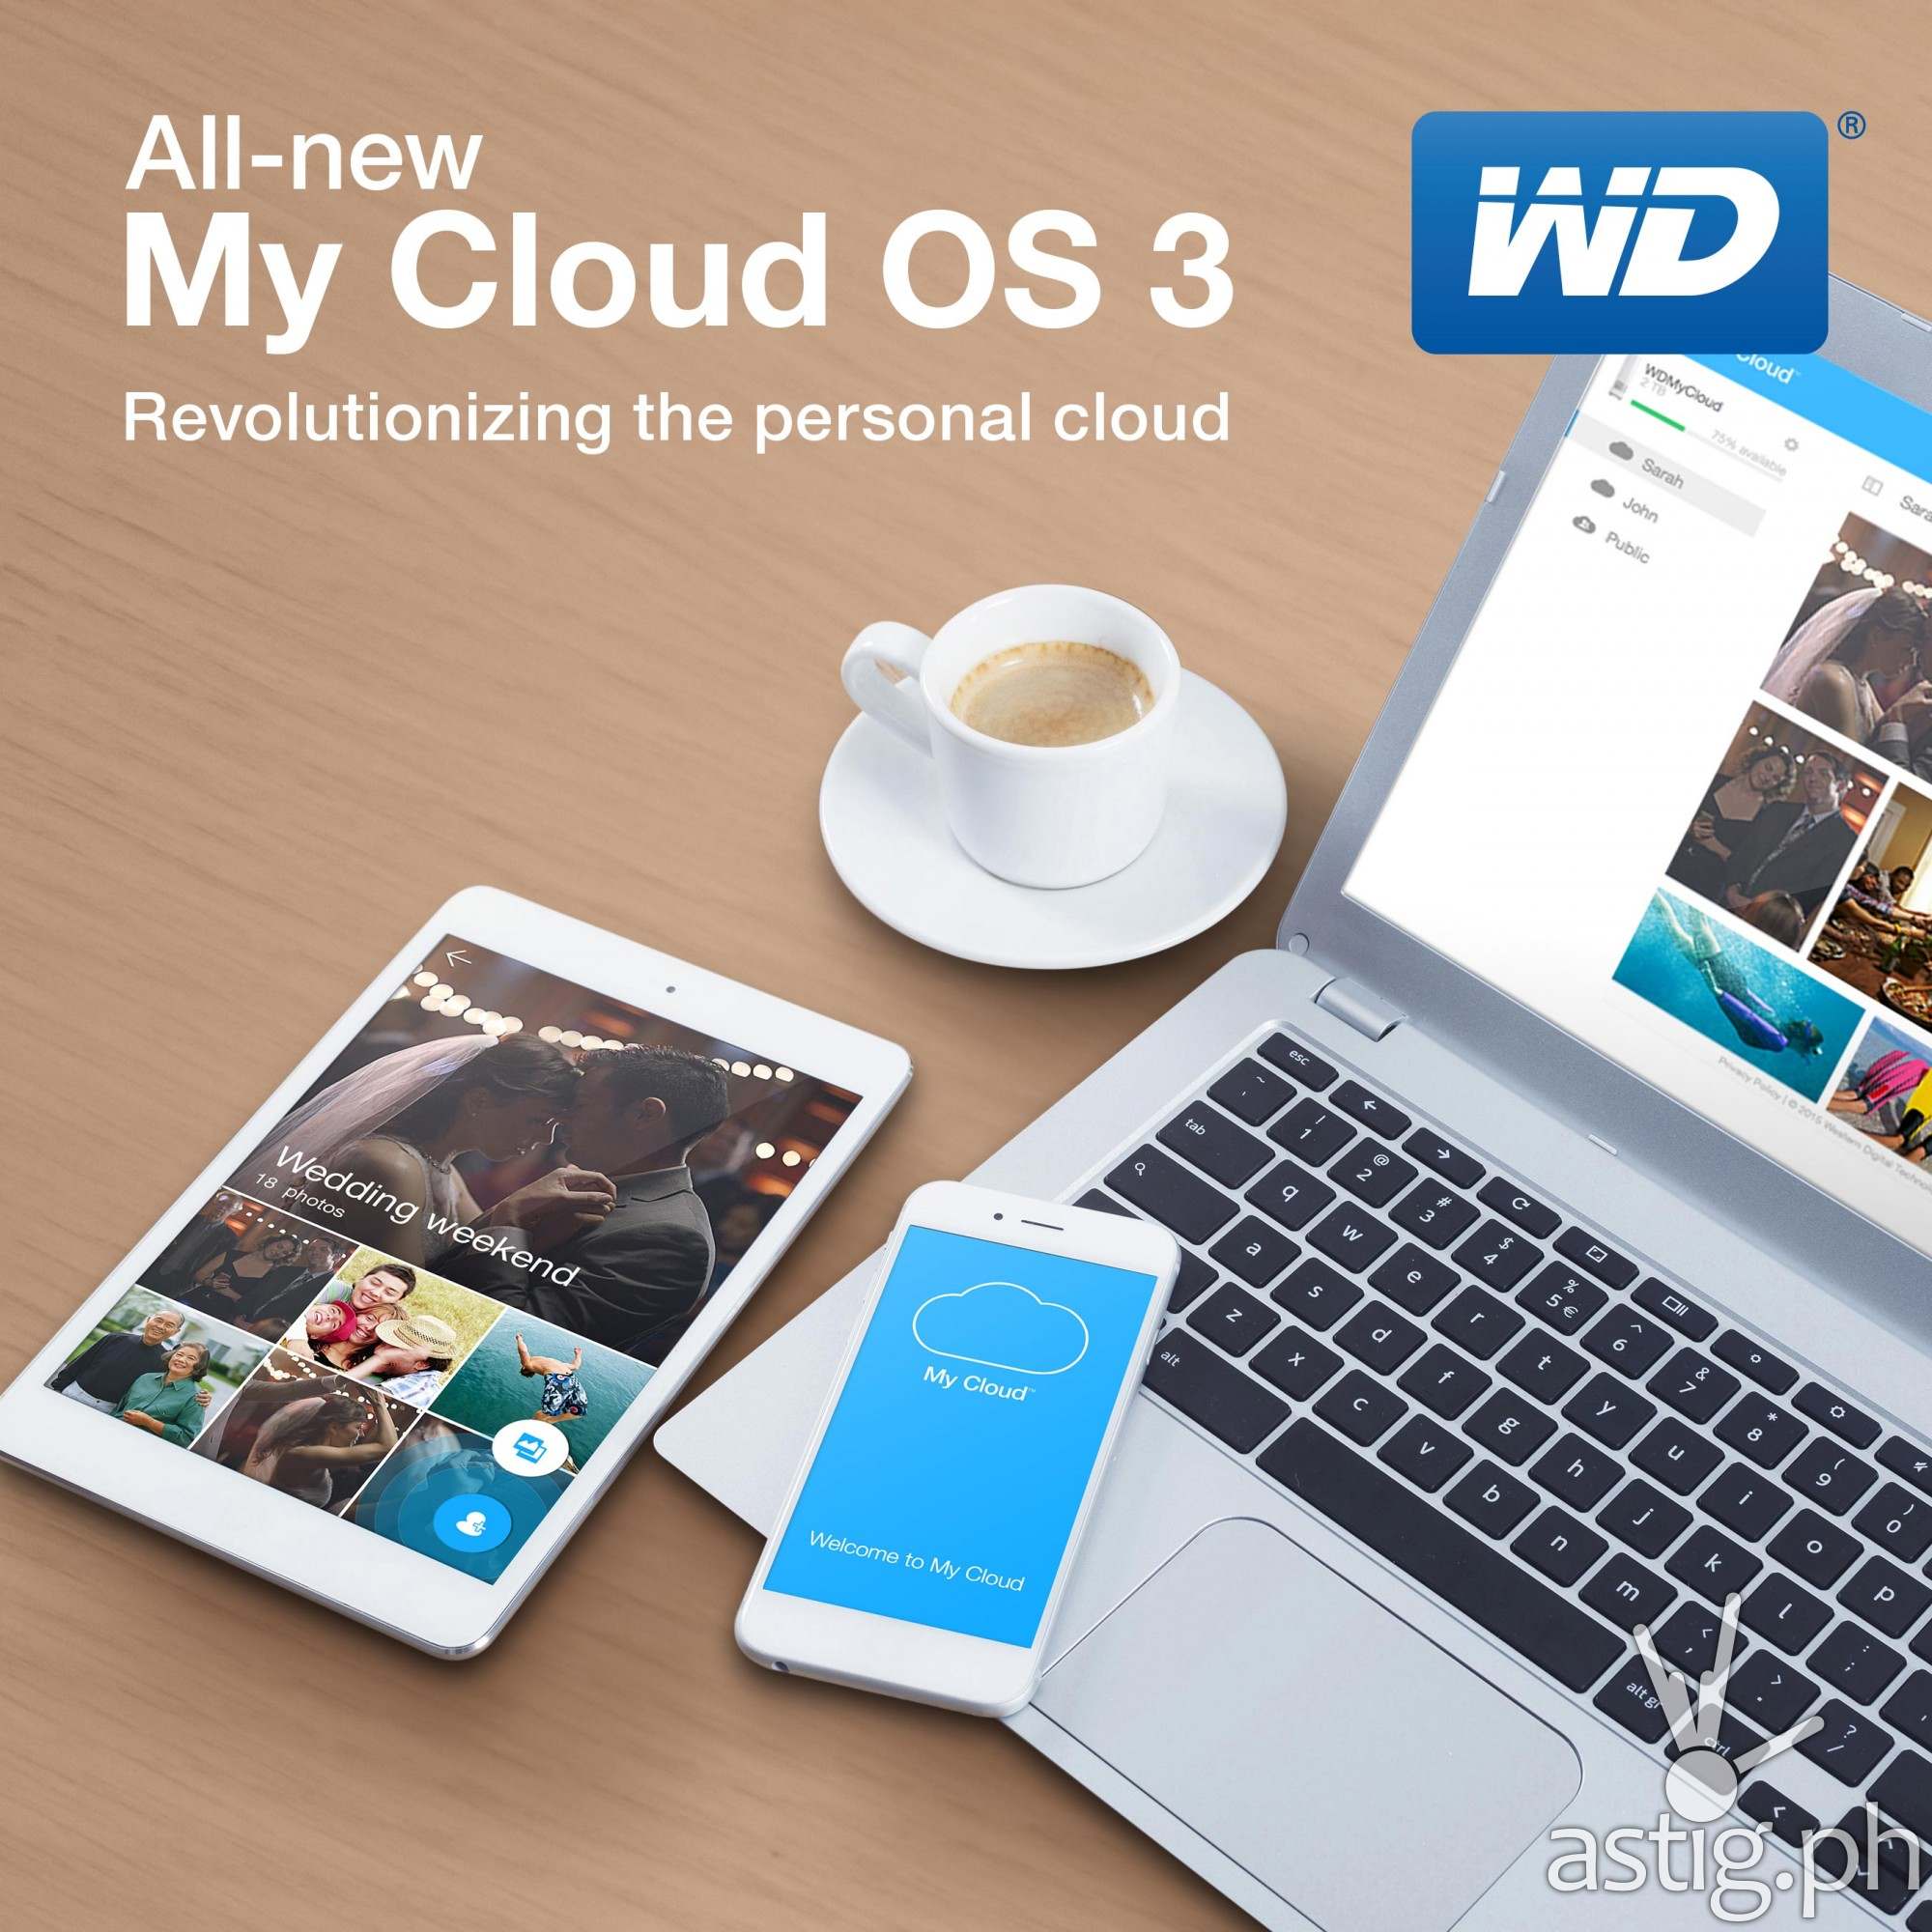 WD My Cloud OS 3